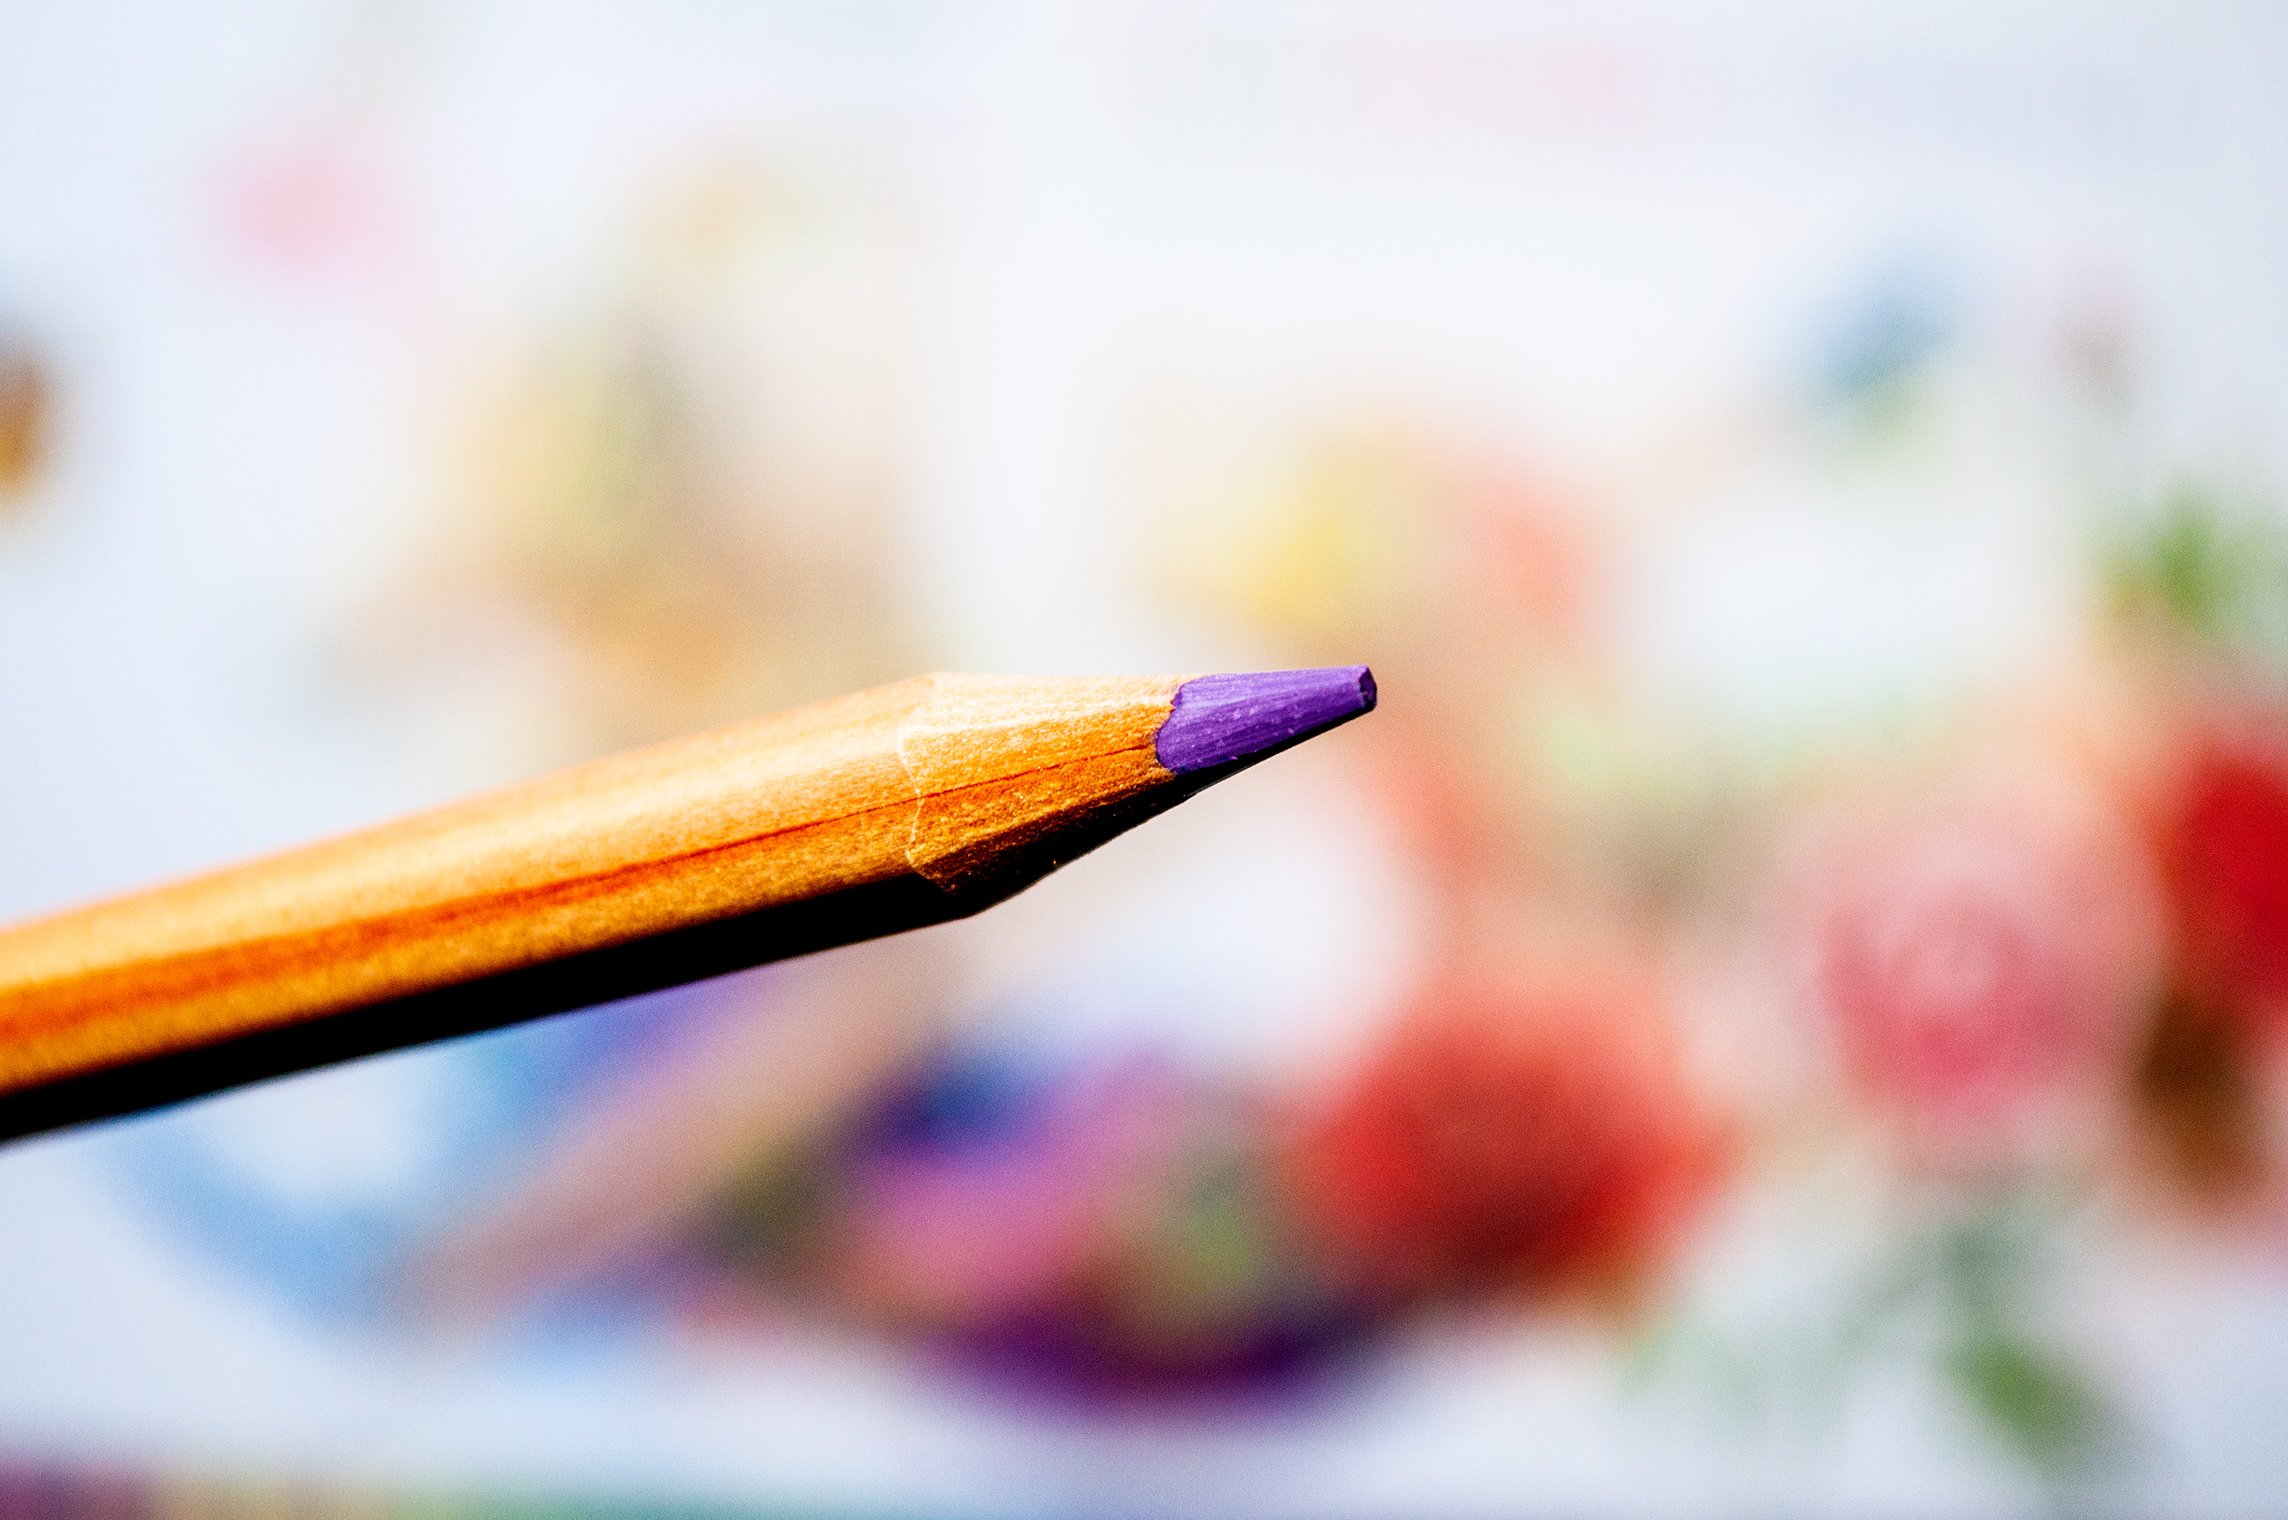 Buy Wynhard Colour Set Colour Pencils Set Drawing Pencils for